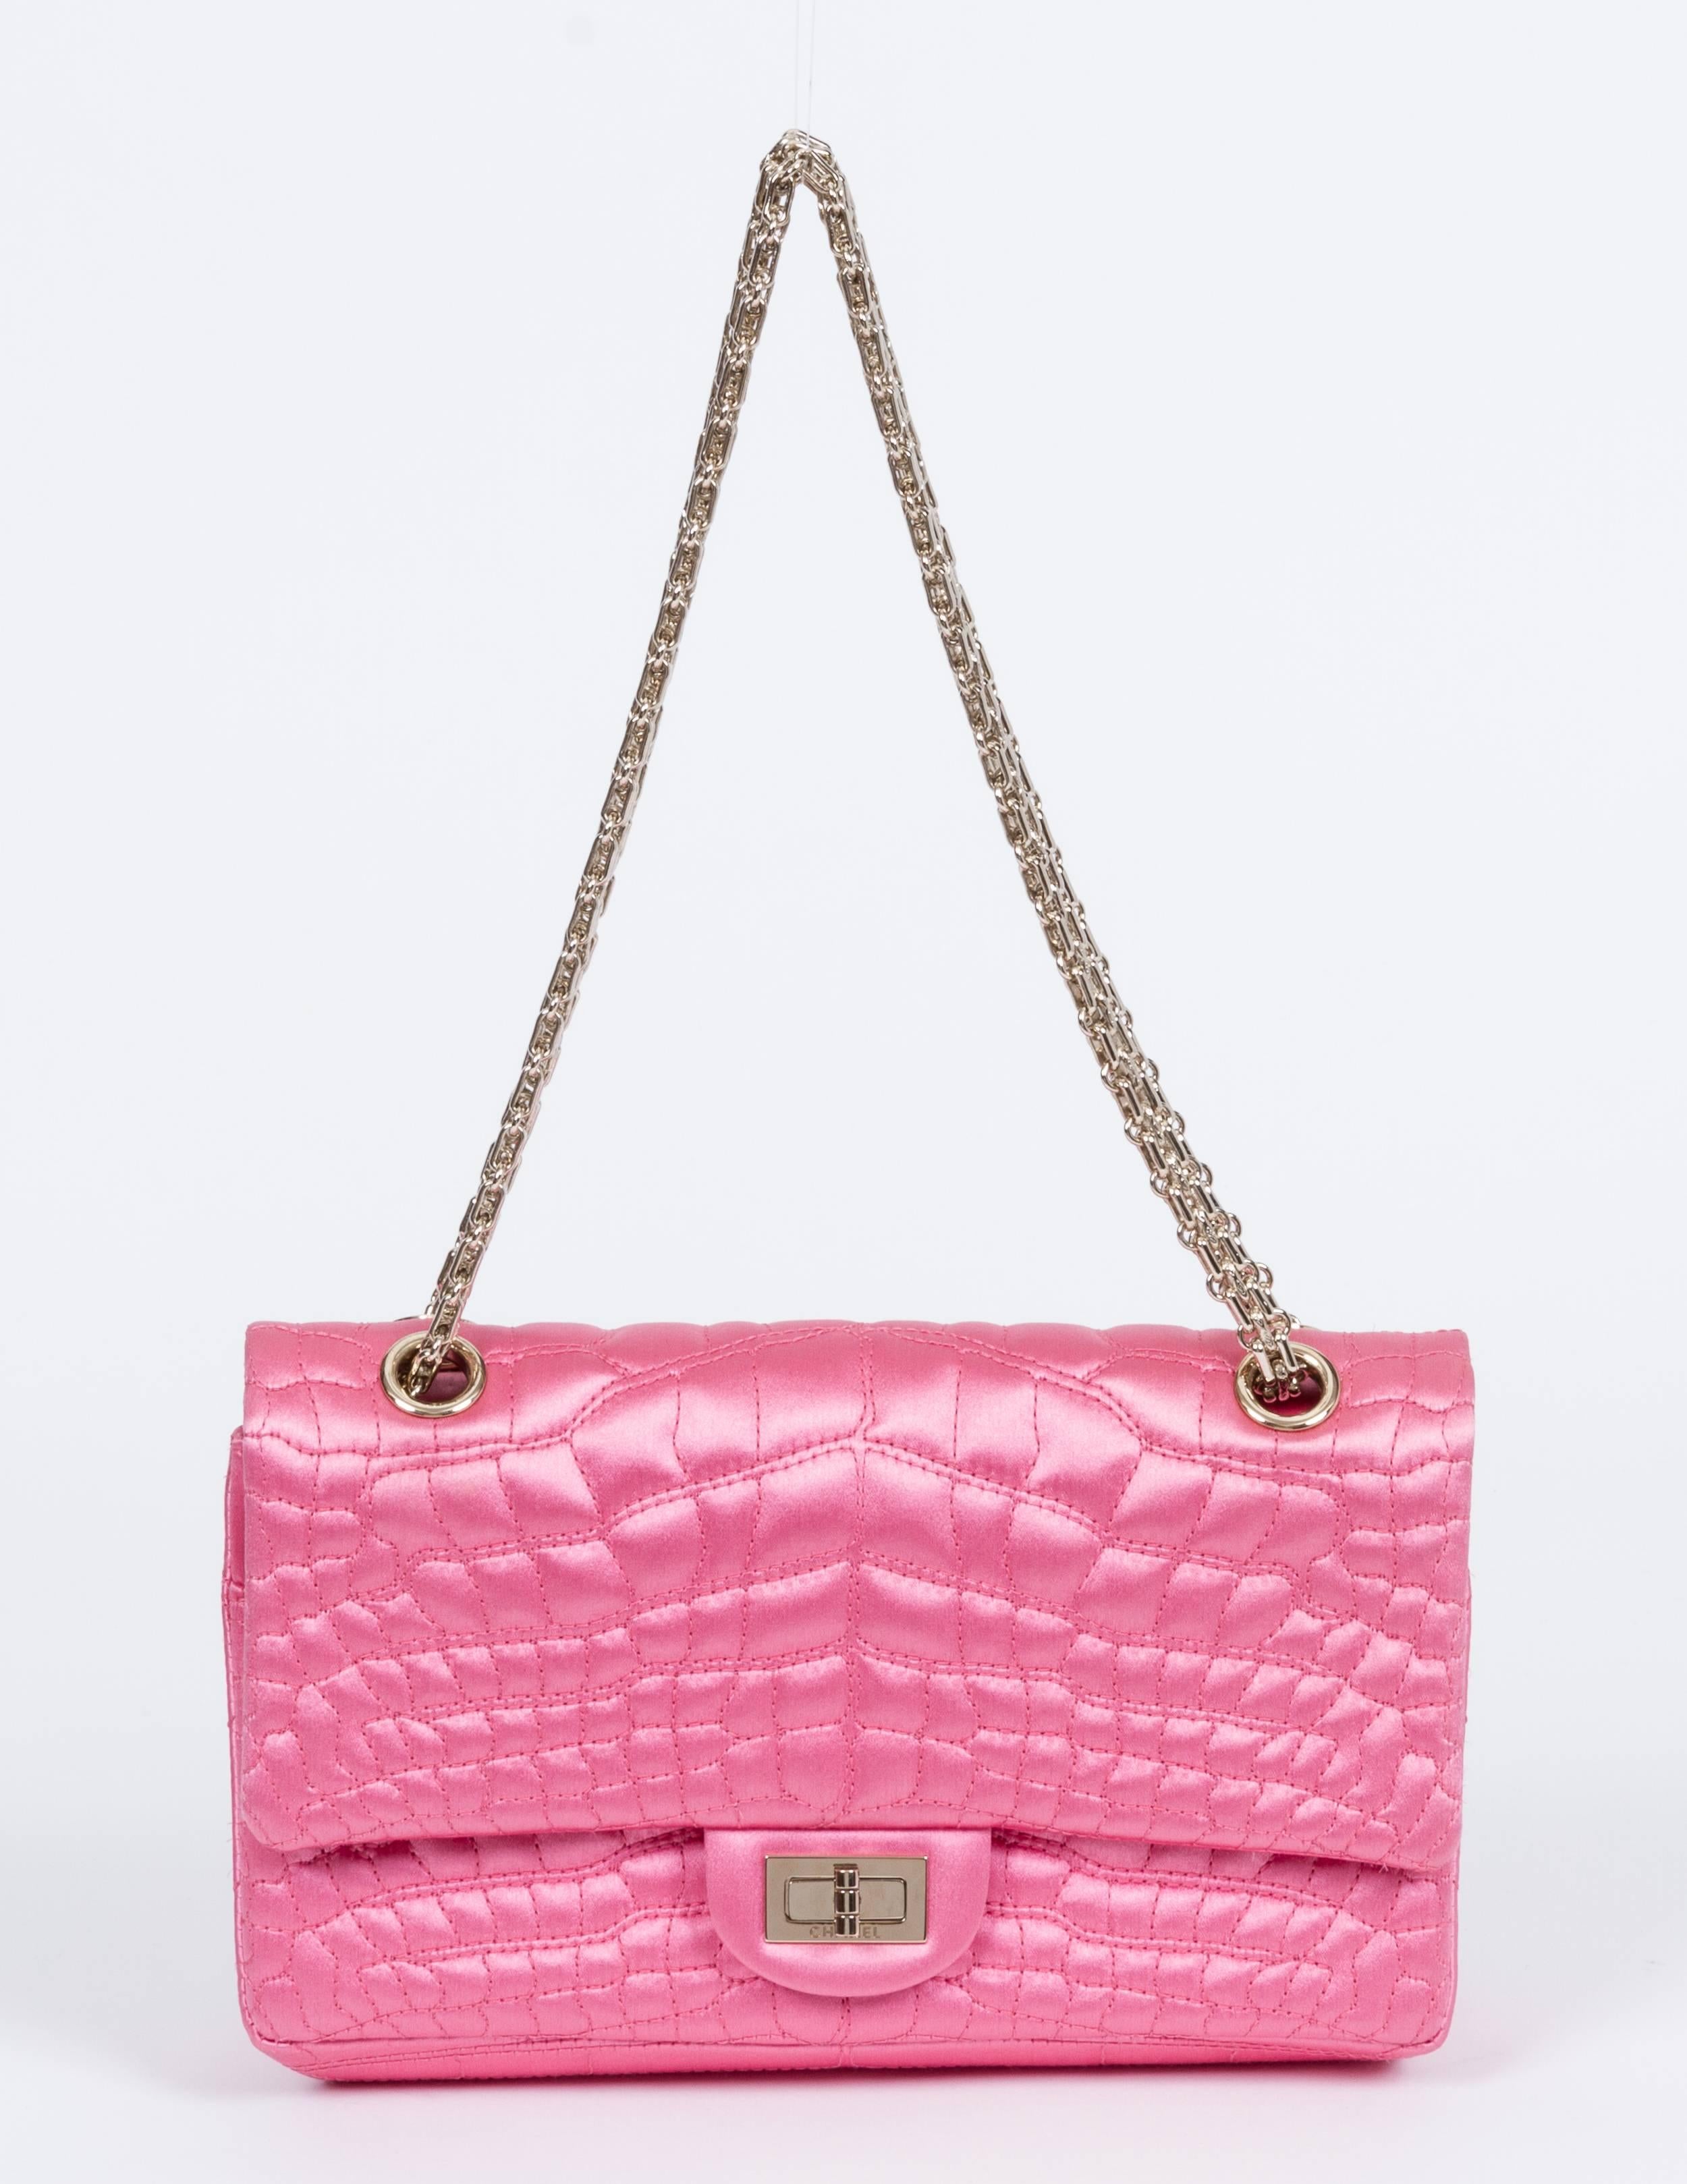 Chanel mint pink silk embossed croc double flap. Interior mirror . Shoulder drop 11